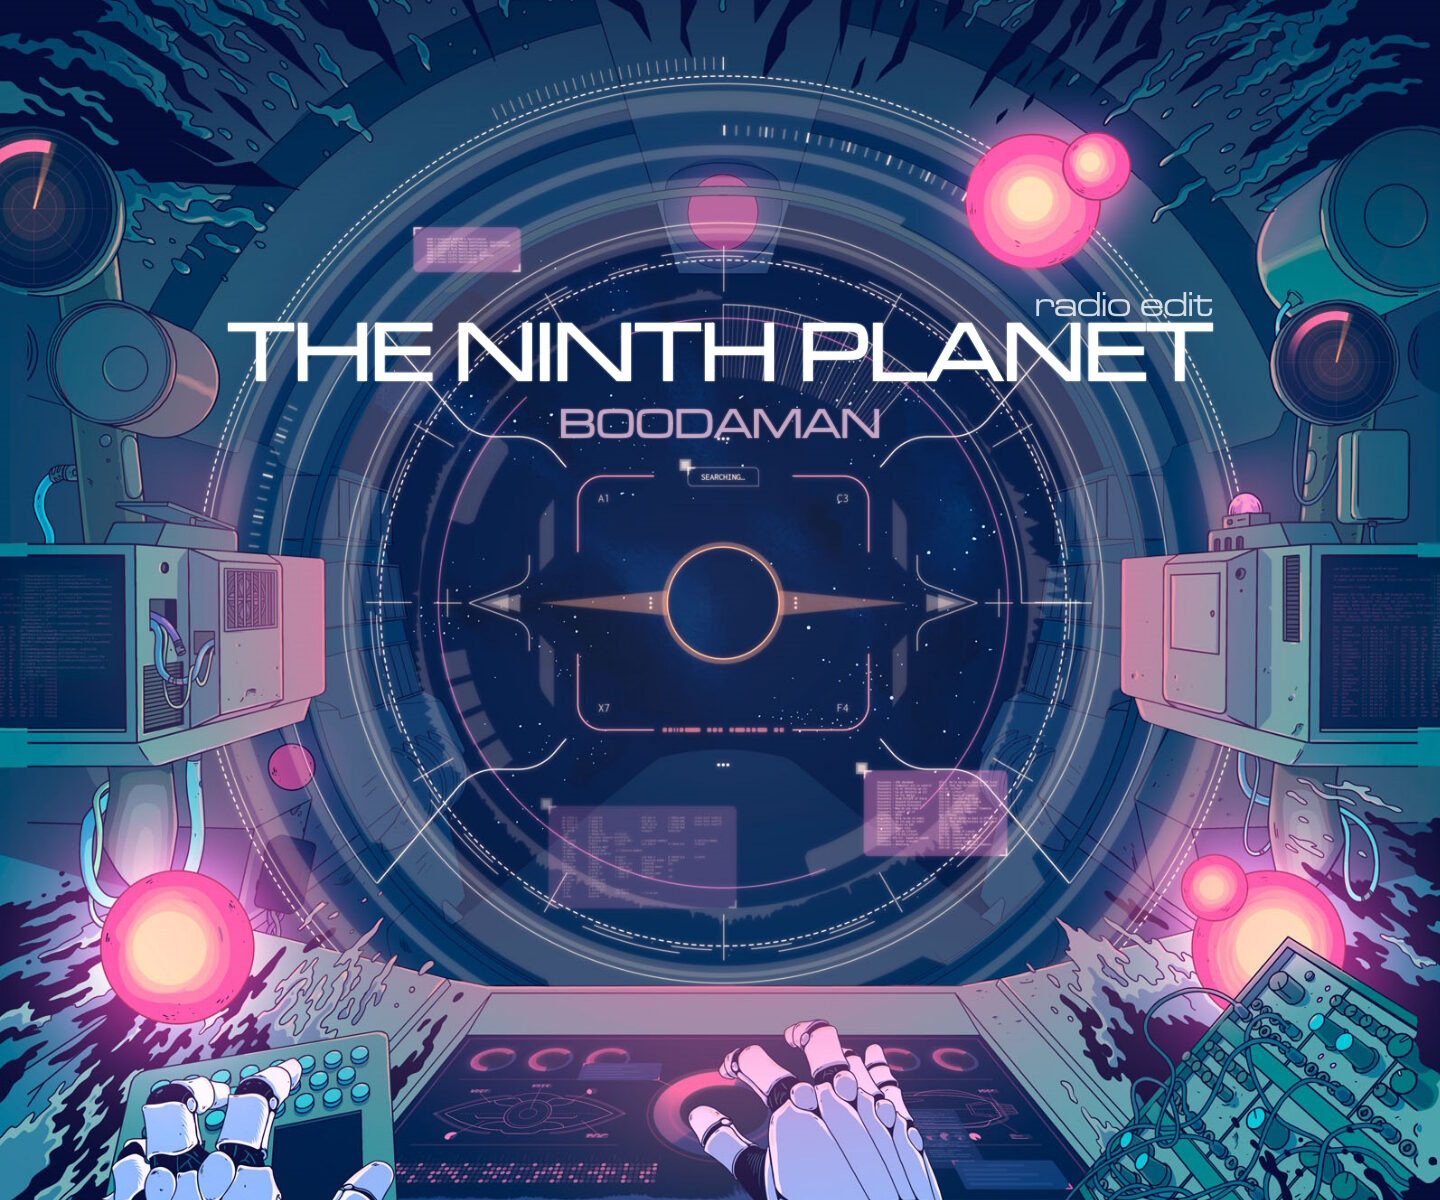 THE NINTH PLANET (radio edit)